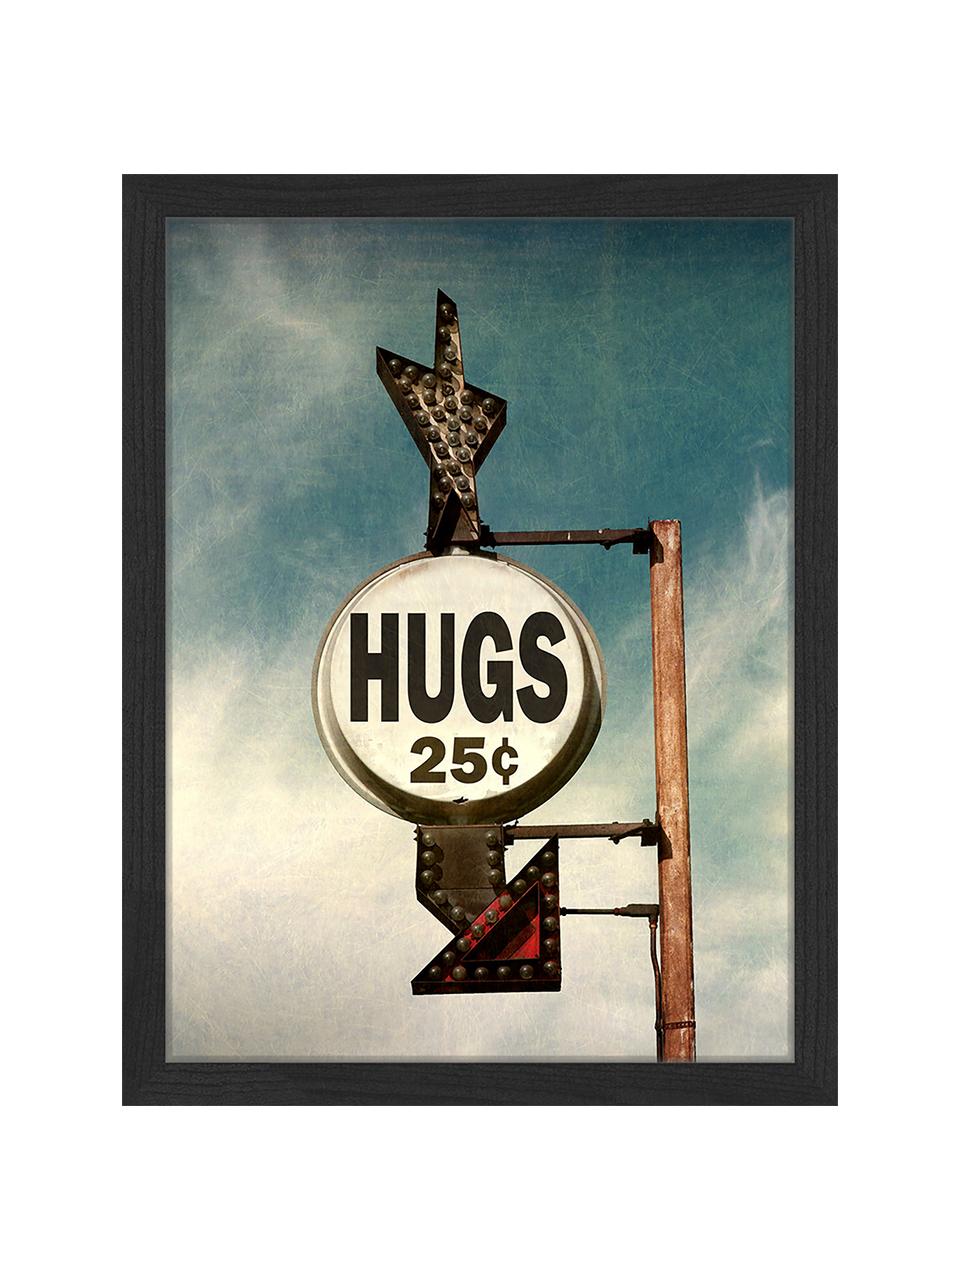 Gerahmter Digitaldruck Hugs For 25C, Bild: Digitaldruck auf Papier, , Rahmen: Holz, lackiert, Front: Plexiglas, Mehrfarbig, B 33 x H 43 cm